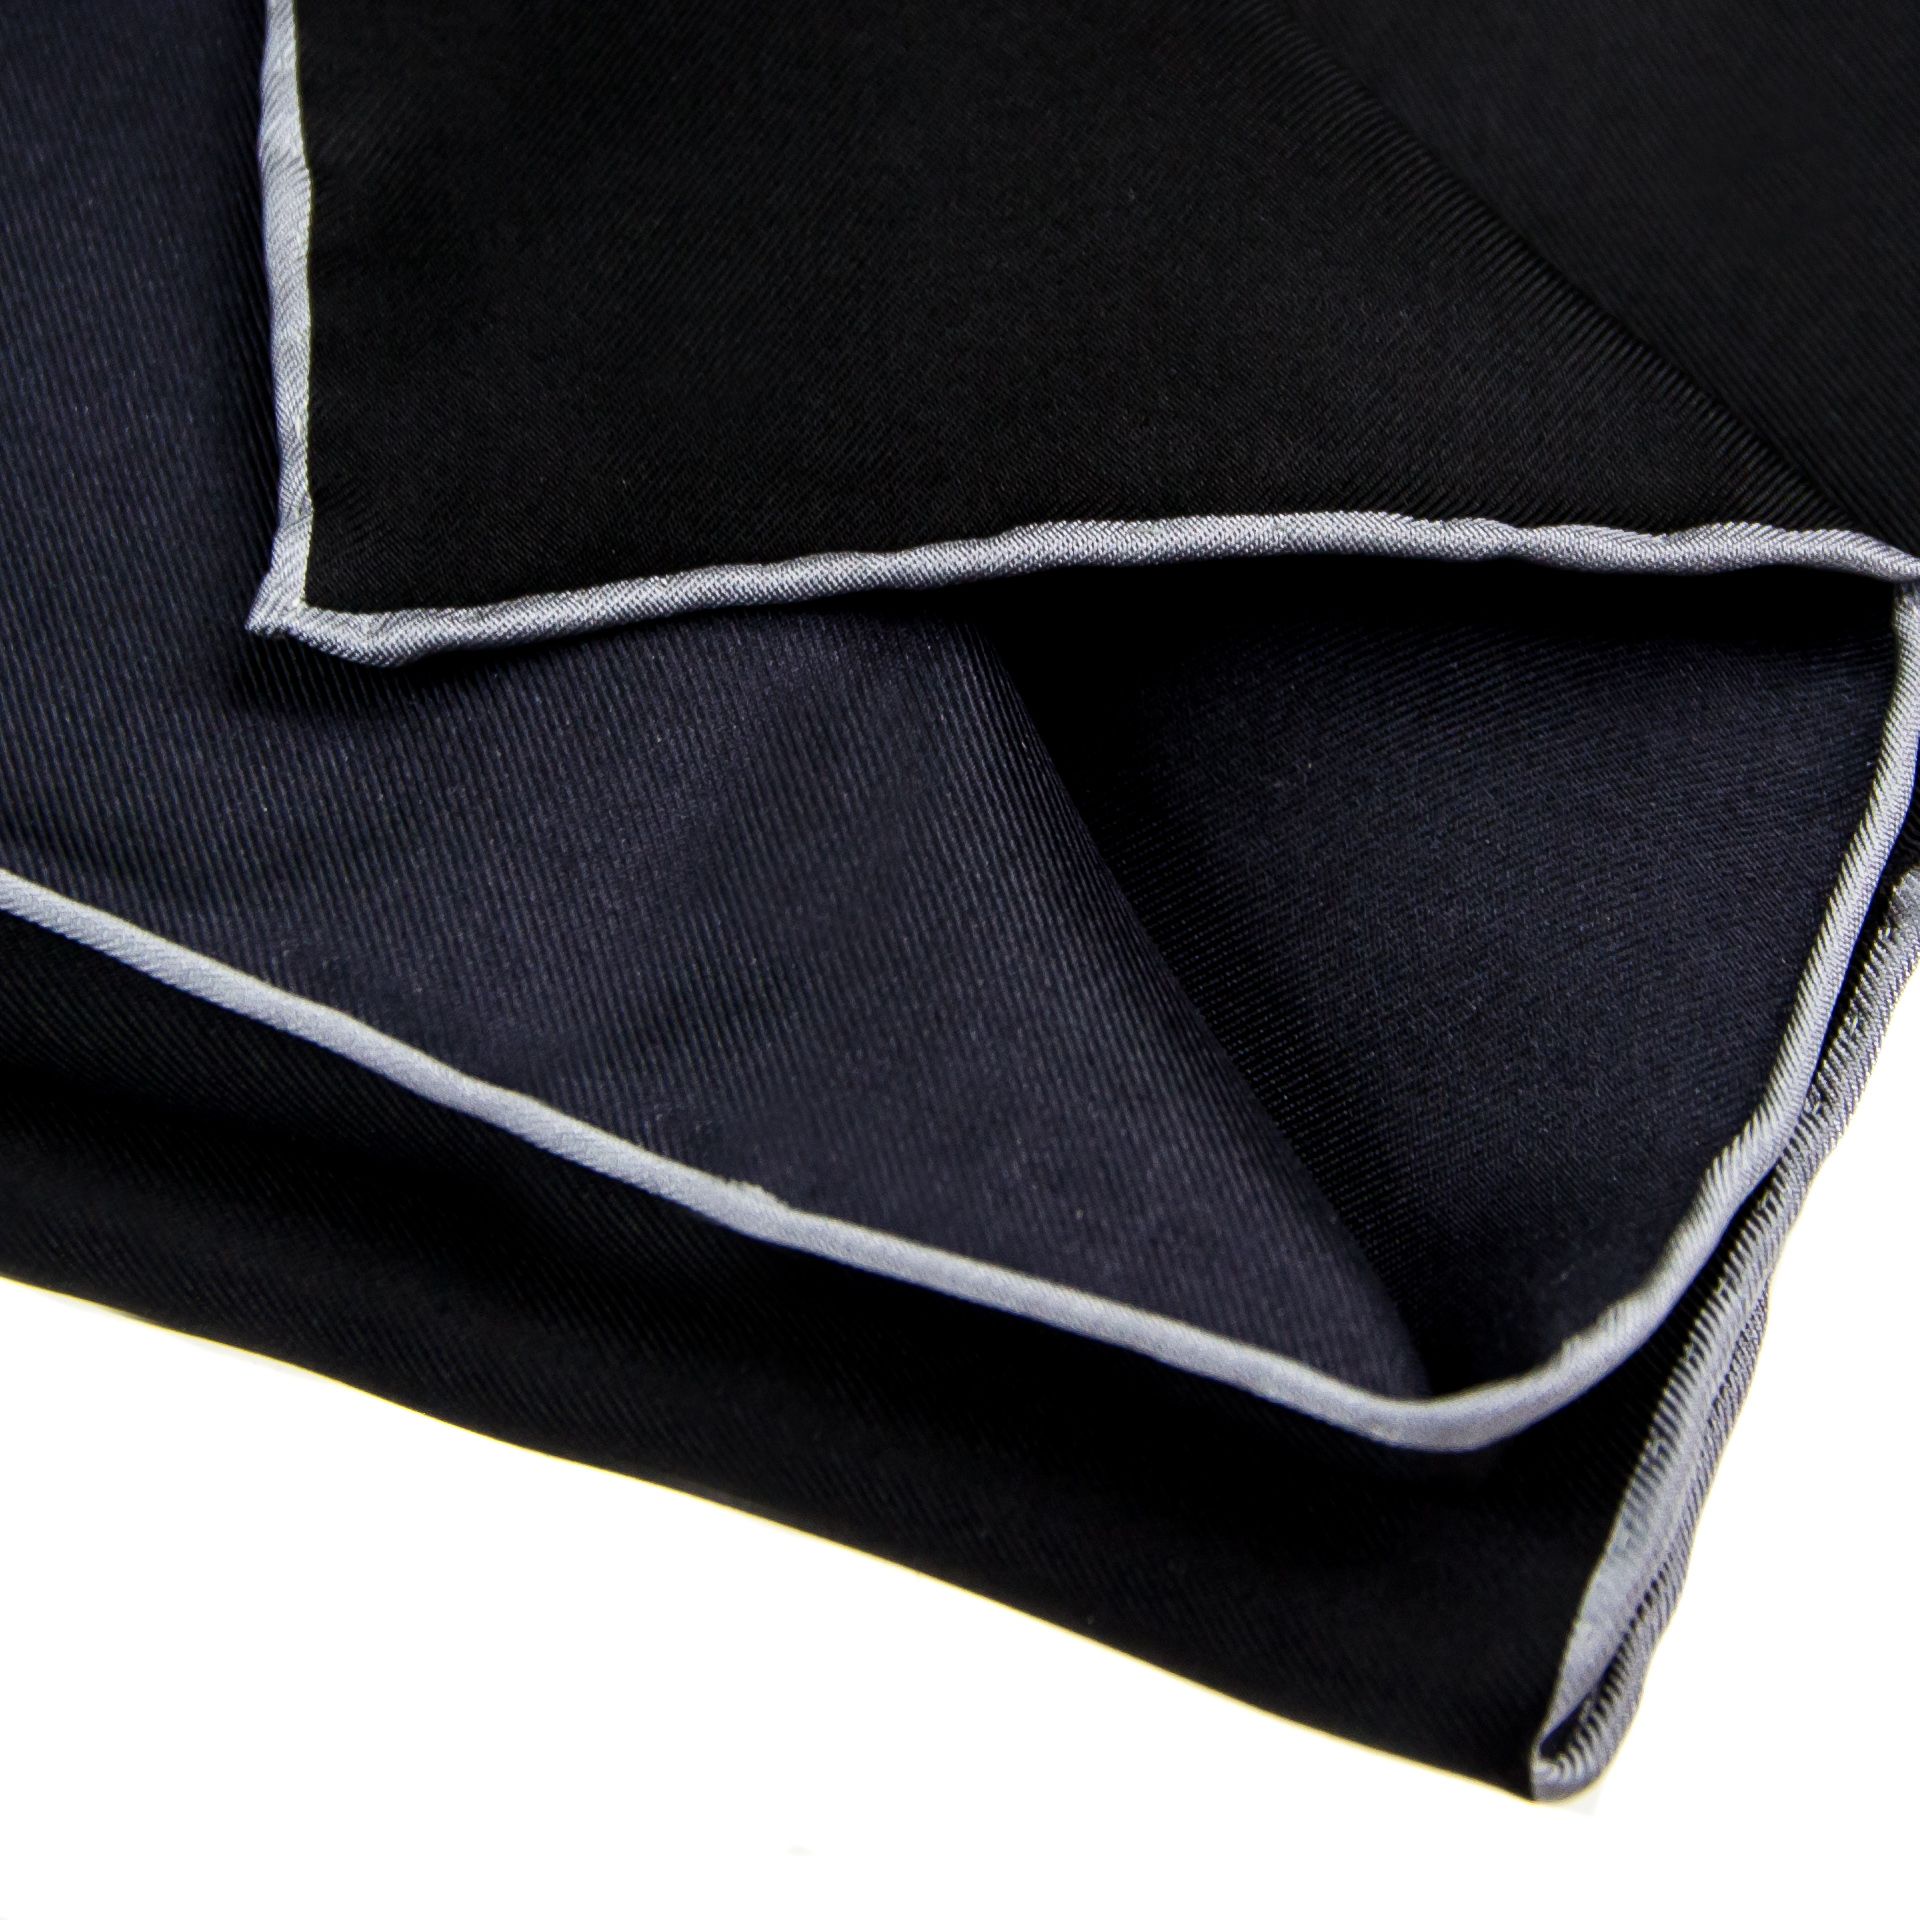 handkorchief - Allora image 2